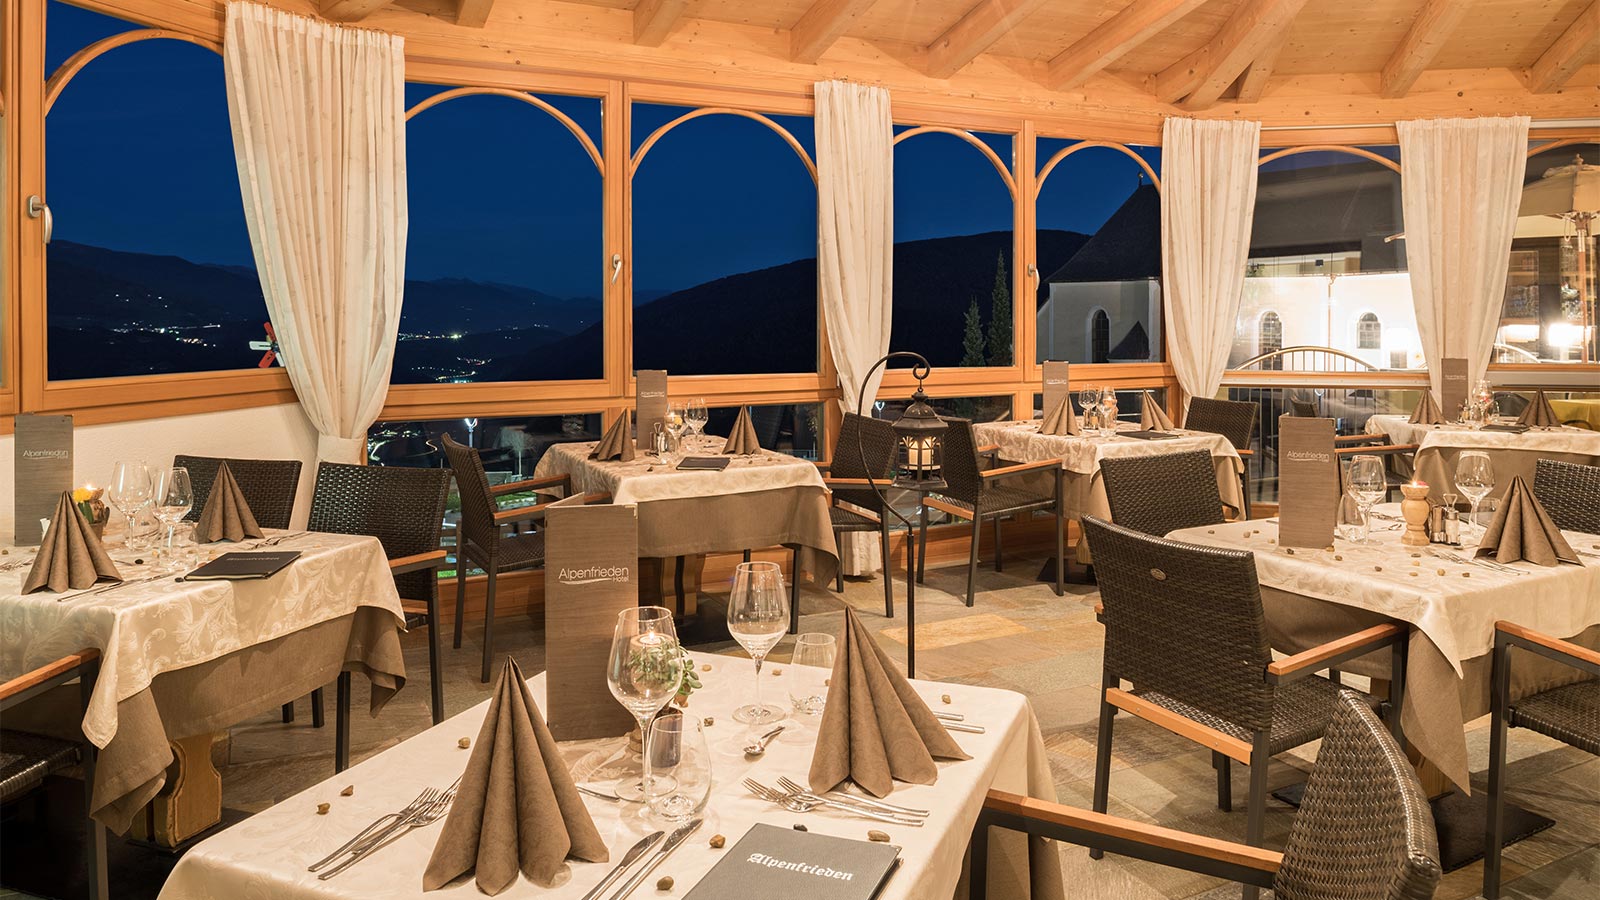 the elegant dining room at Hotel Alpenfrieden